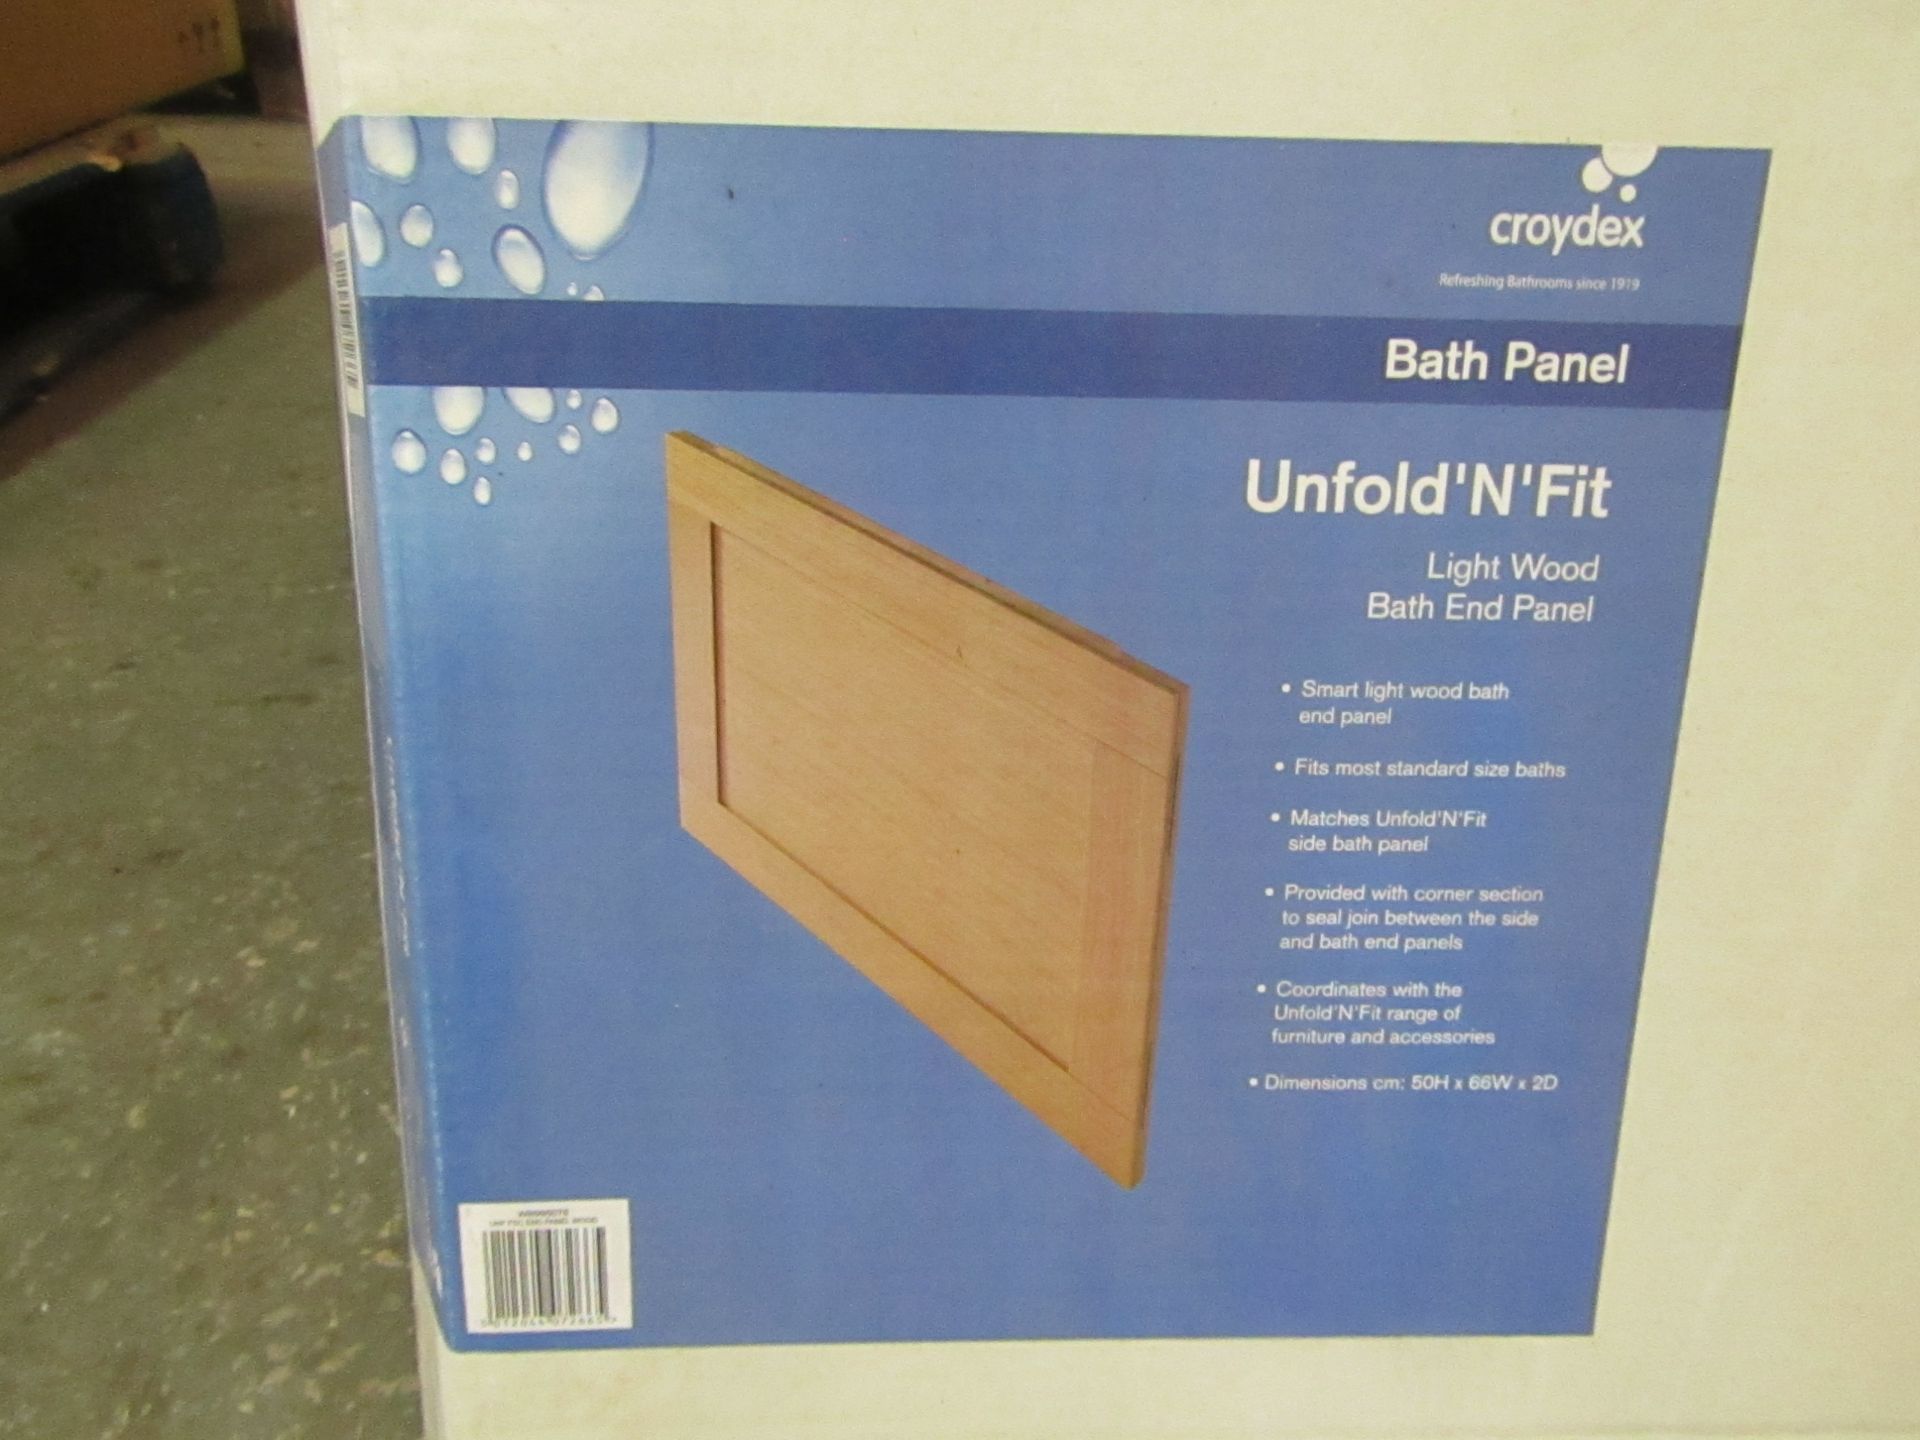 5x Croydex - Unfold 'N' Fit Light Wood Bath End Panel ( 50H x 66W x 2D ) - Unused & Boxed.